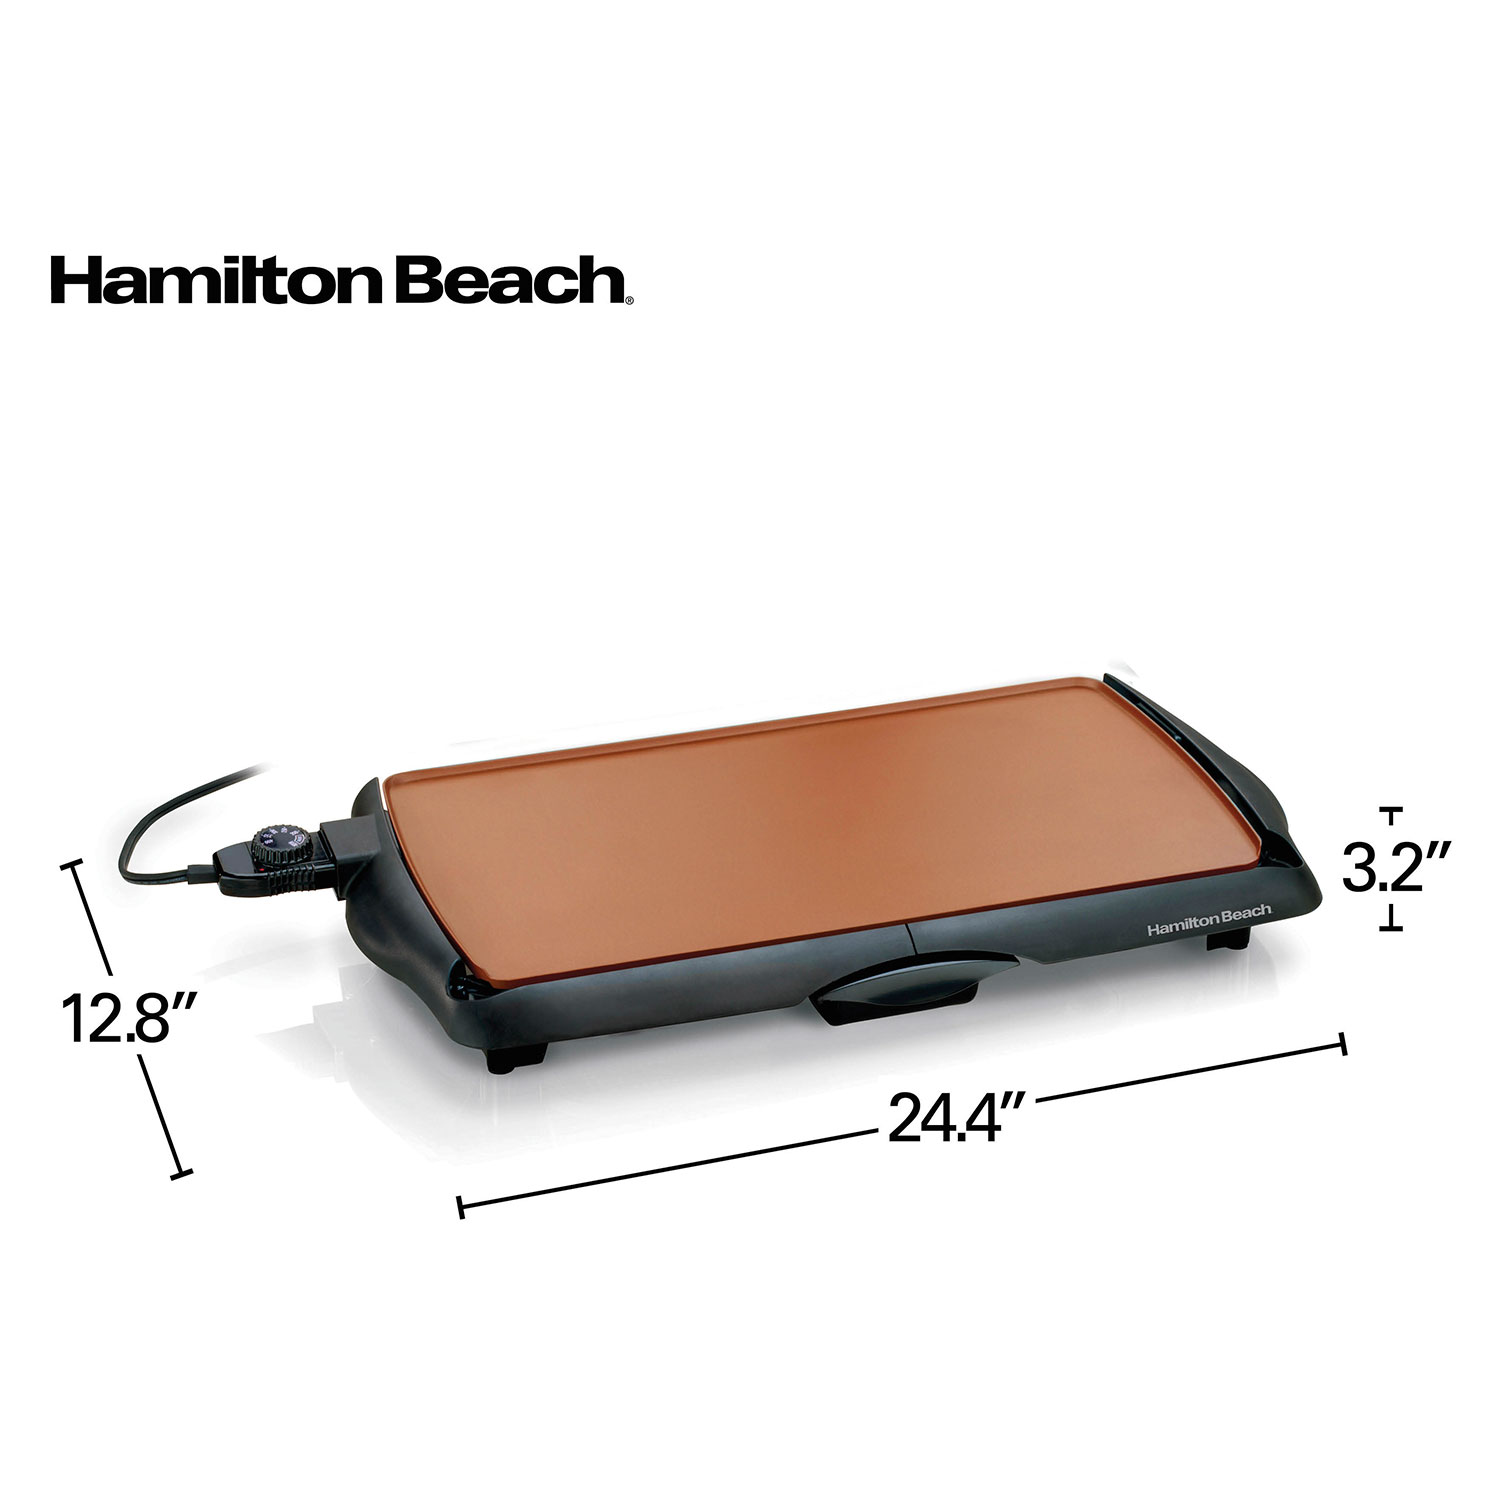 Hamilton Beach Durathon Griddle 38521 : Target